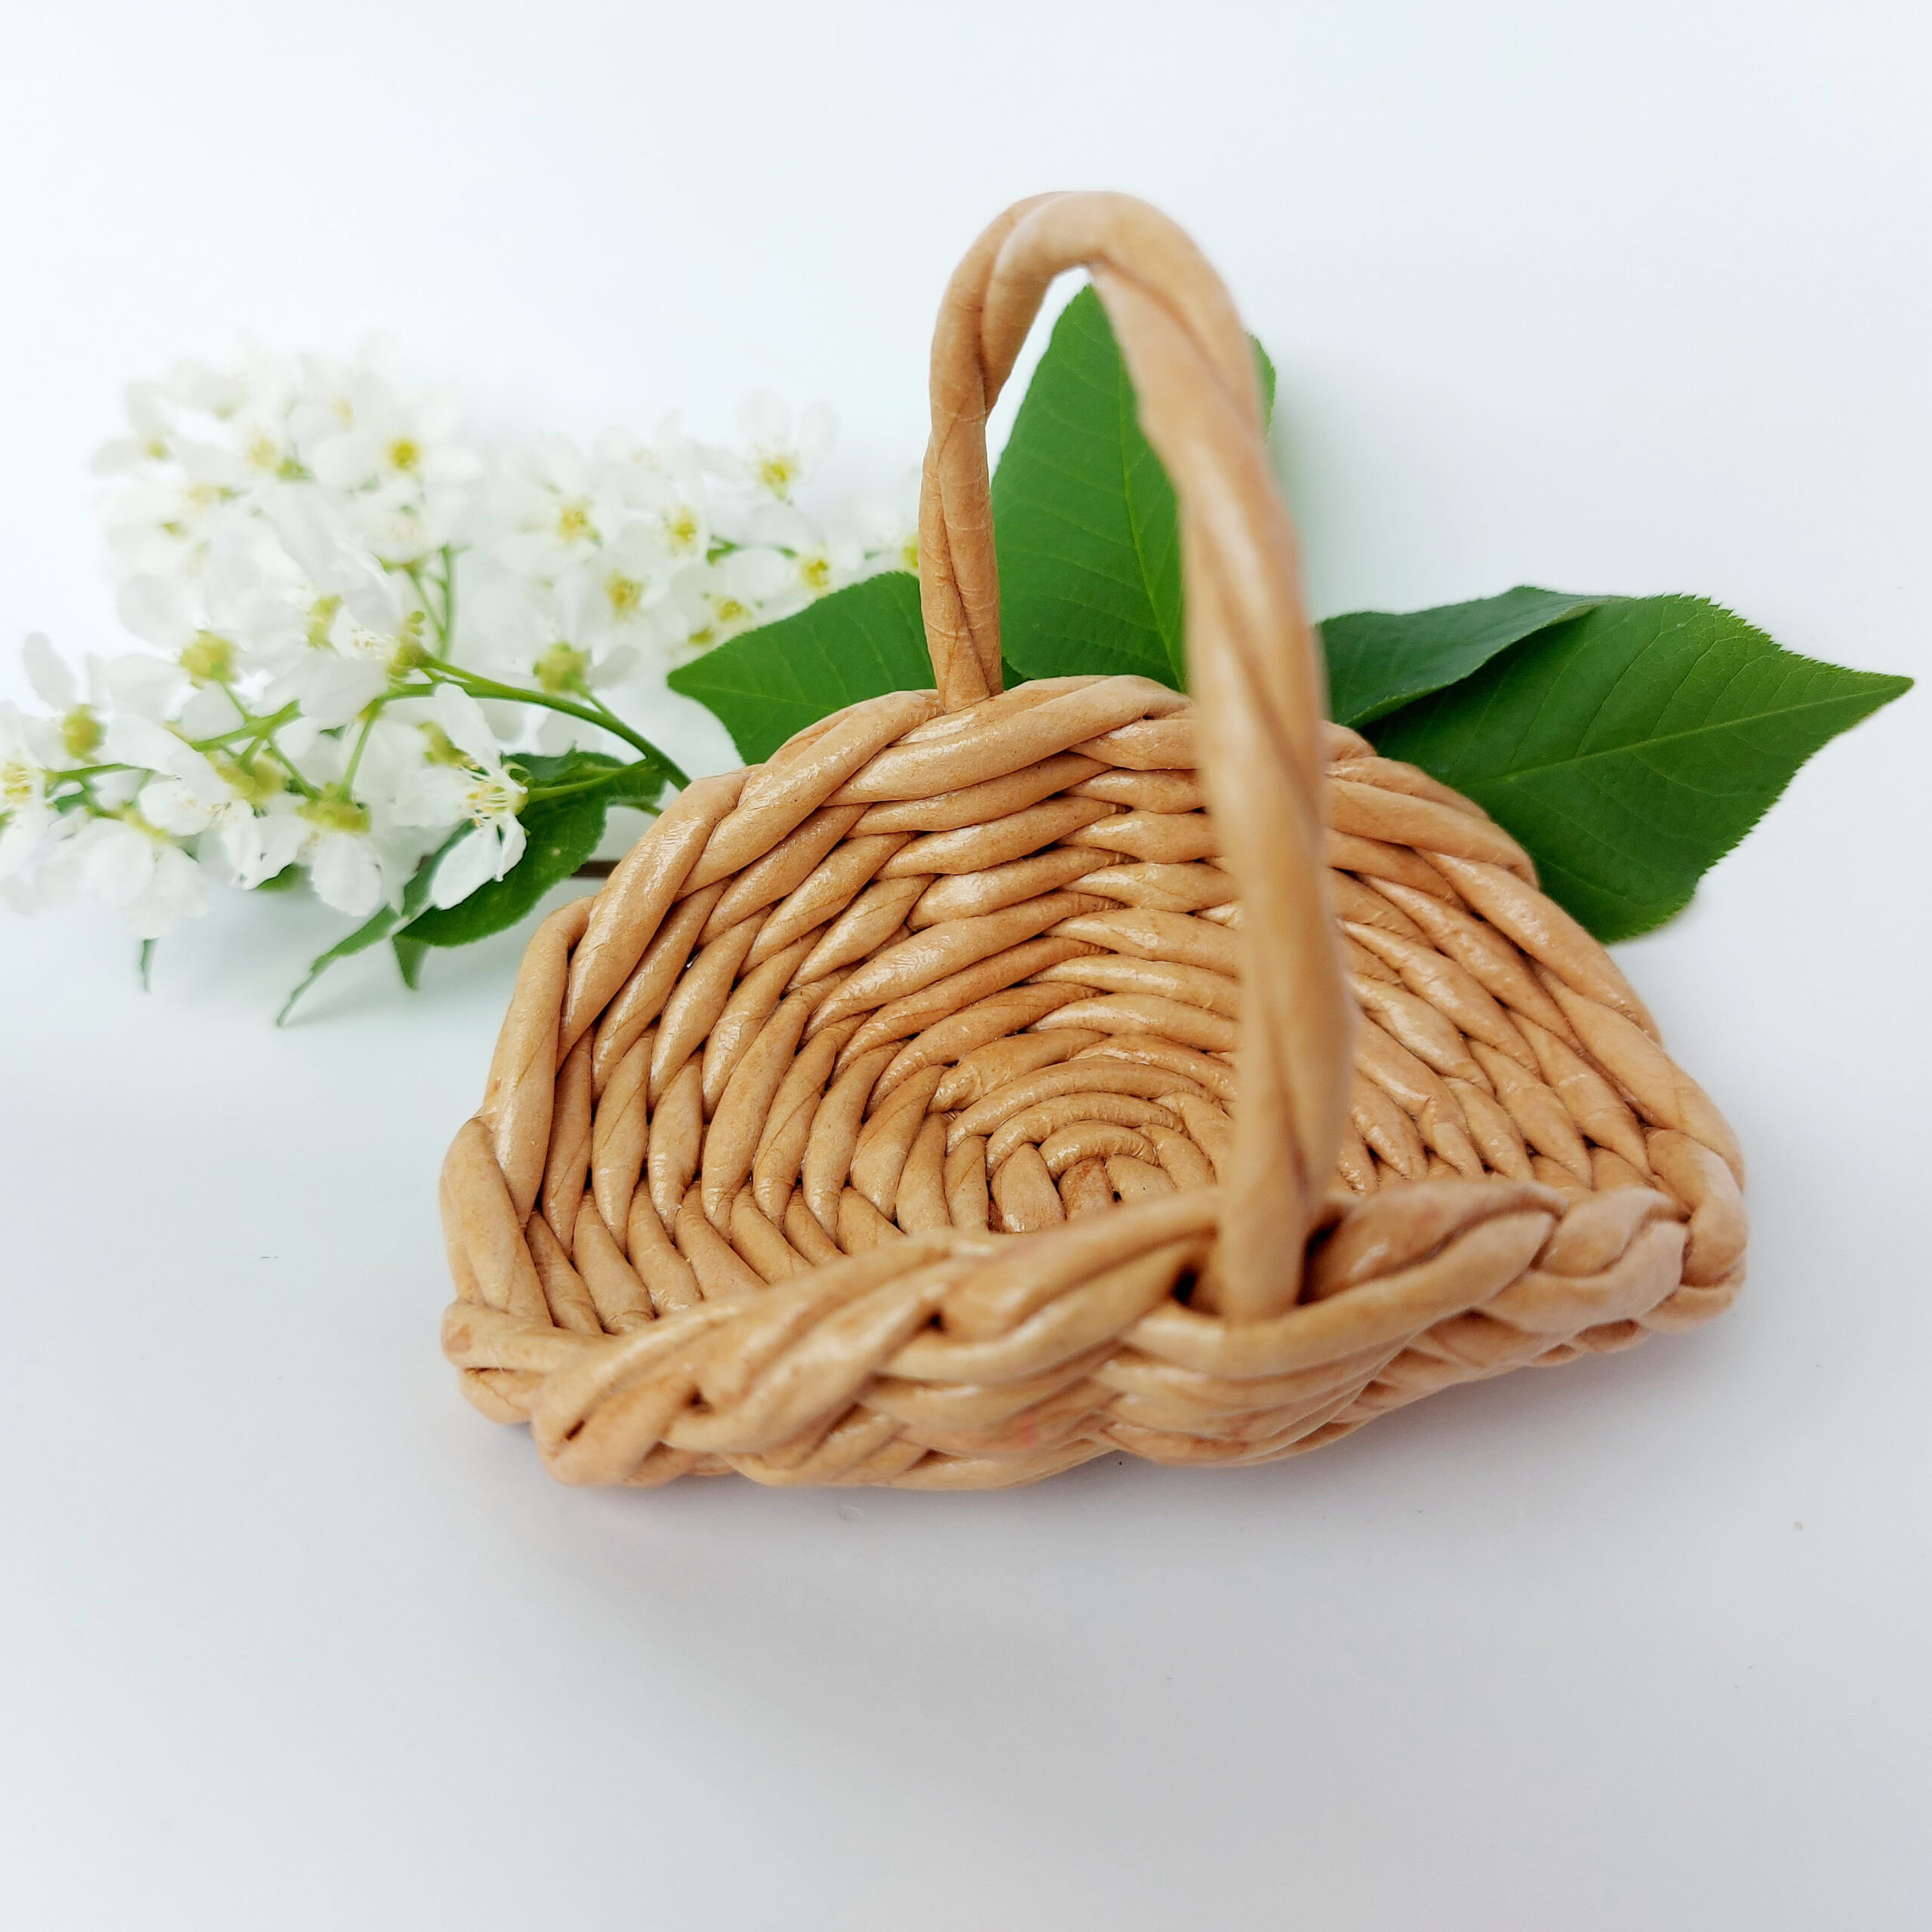 Basket w/ Handle Small - Dollhouse Miniature